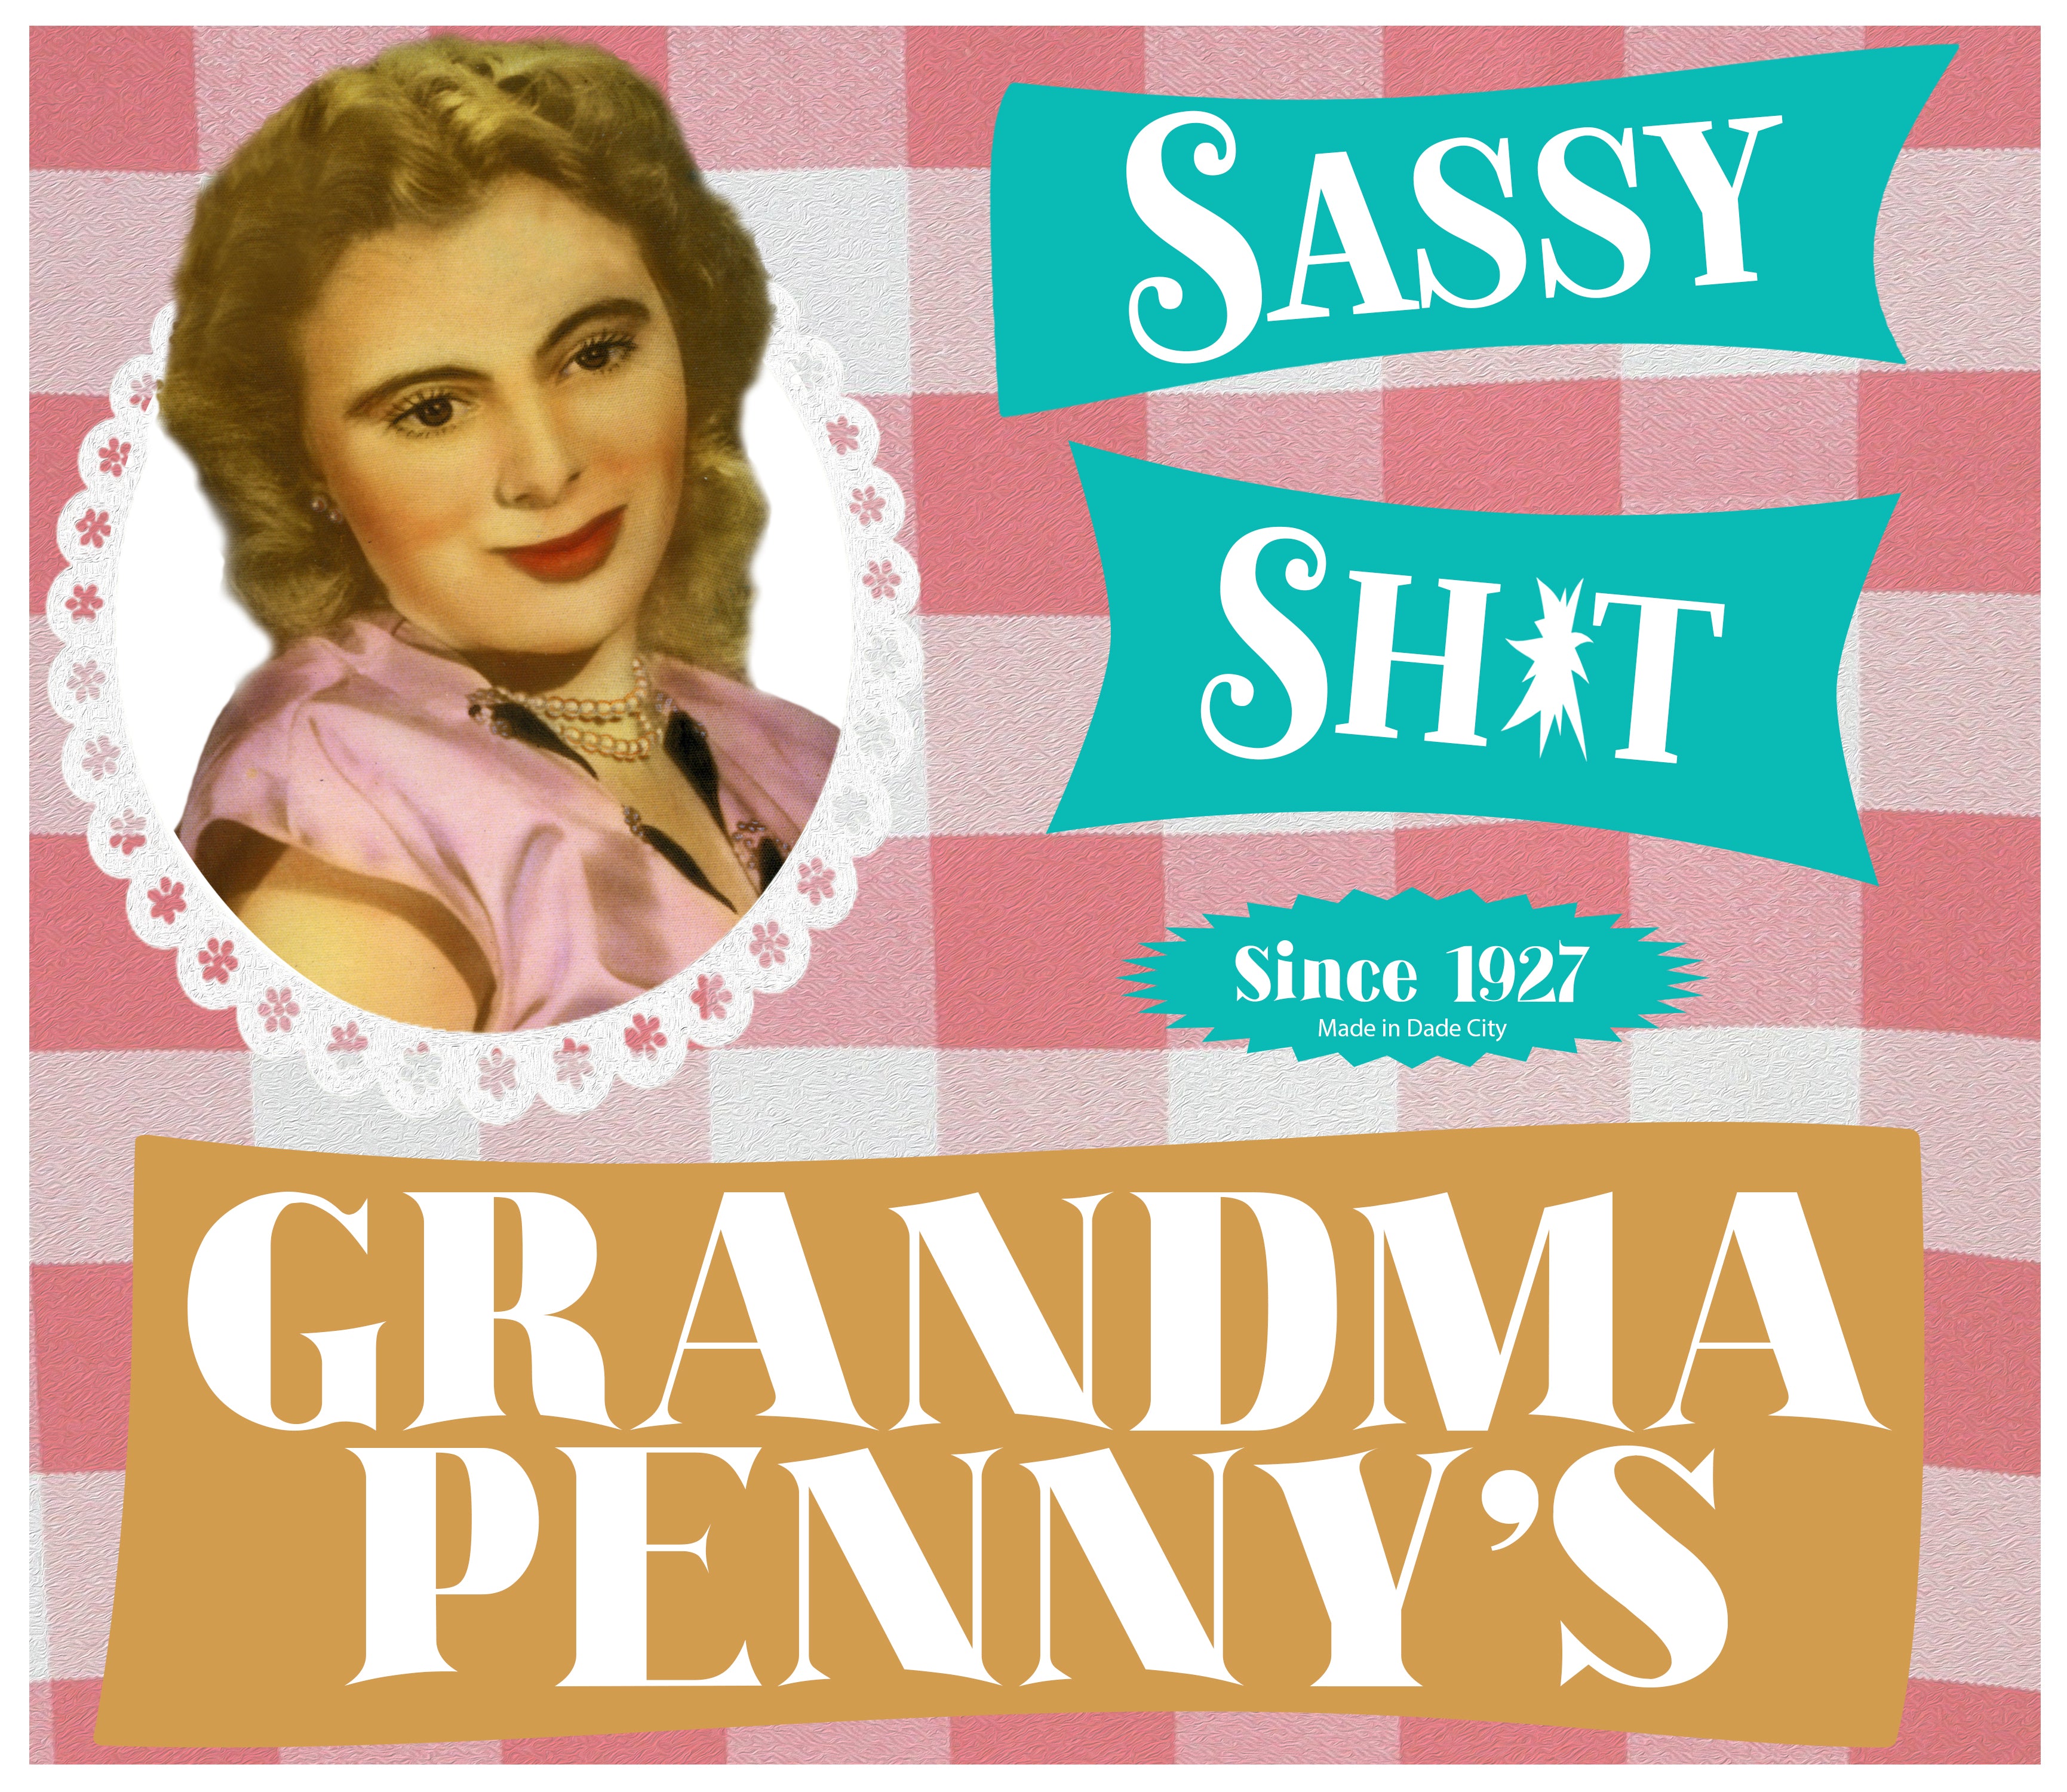 Grandma Penny's Sassy Sh%t